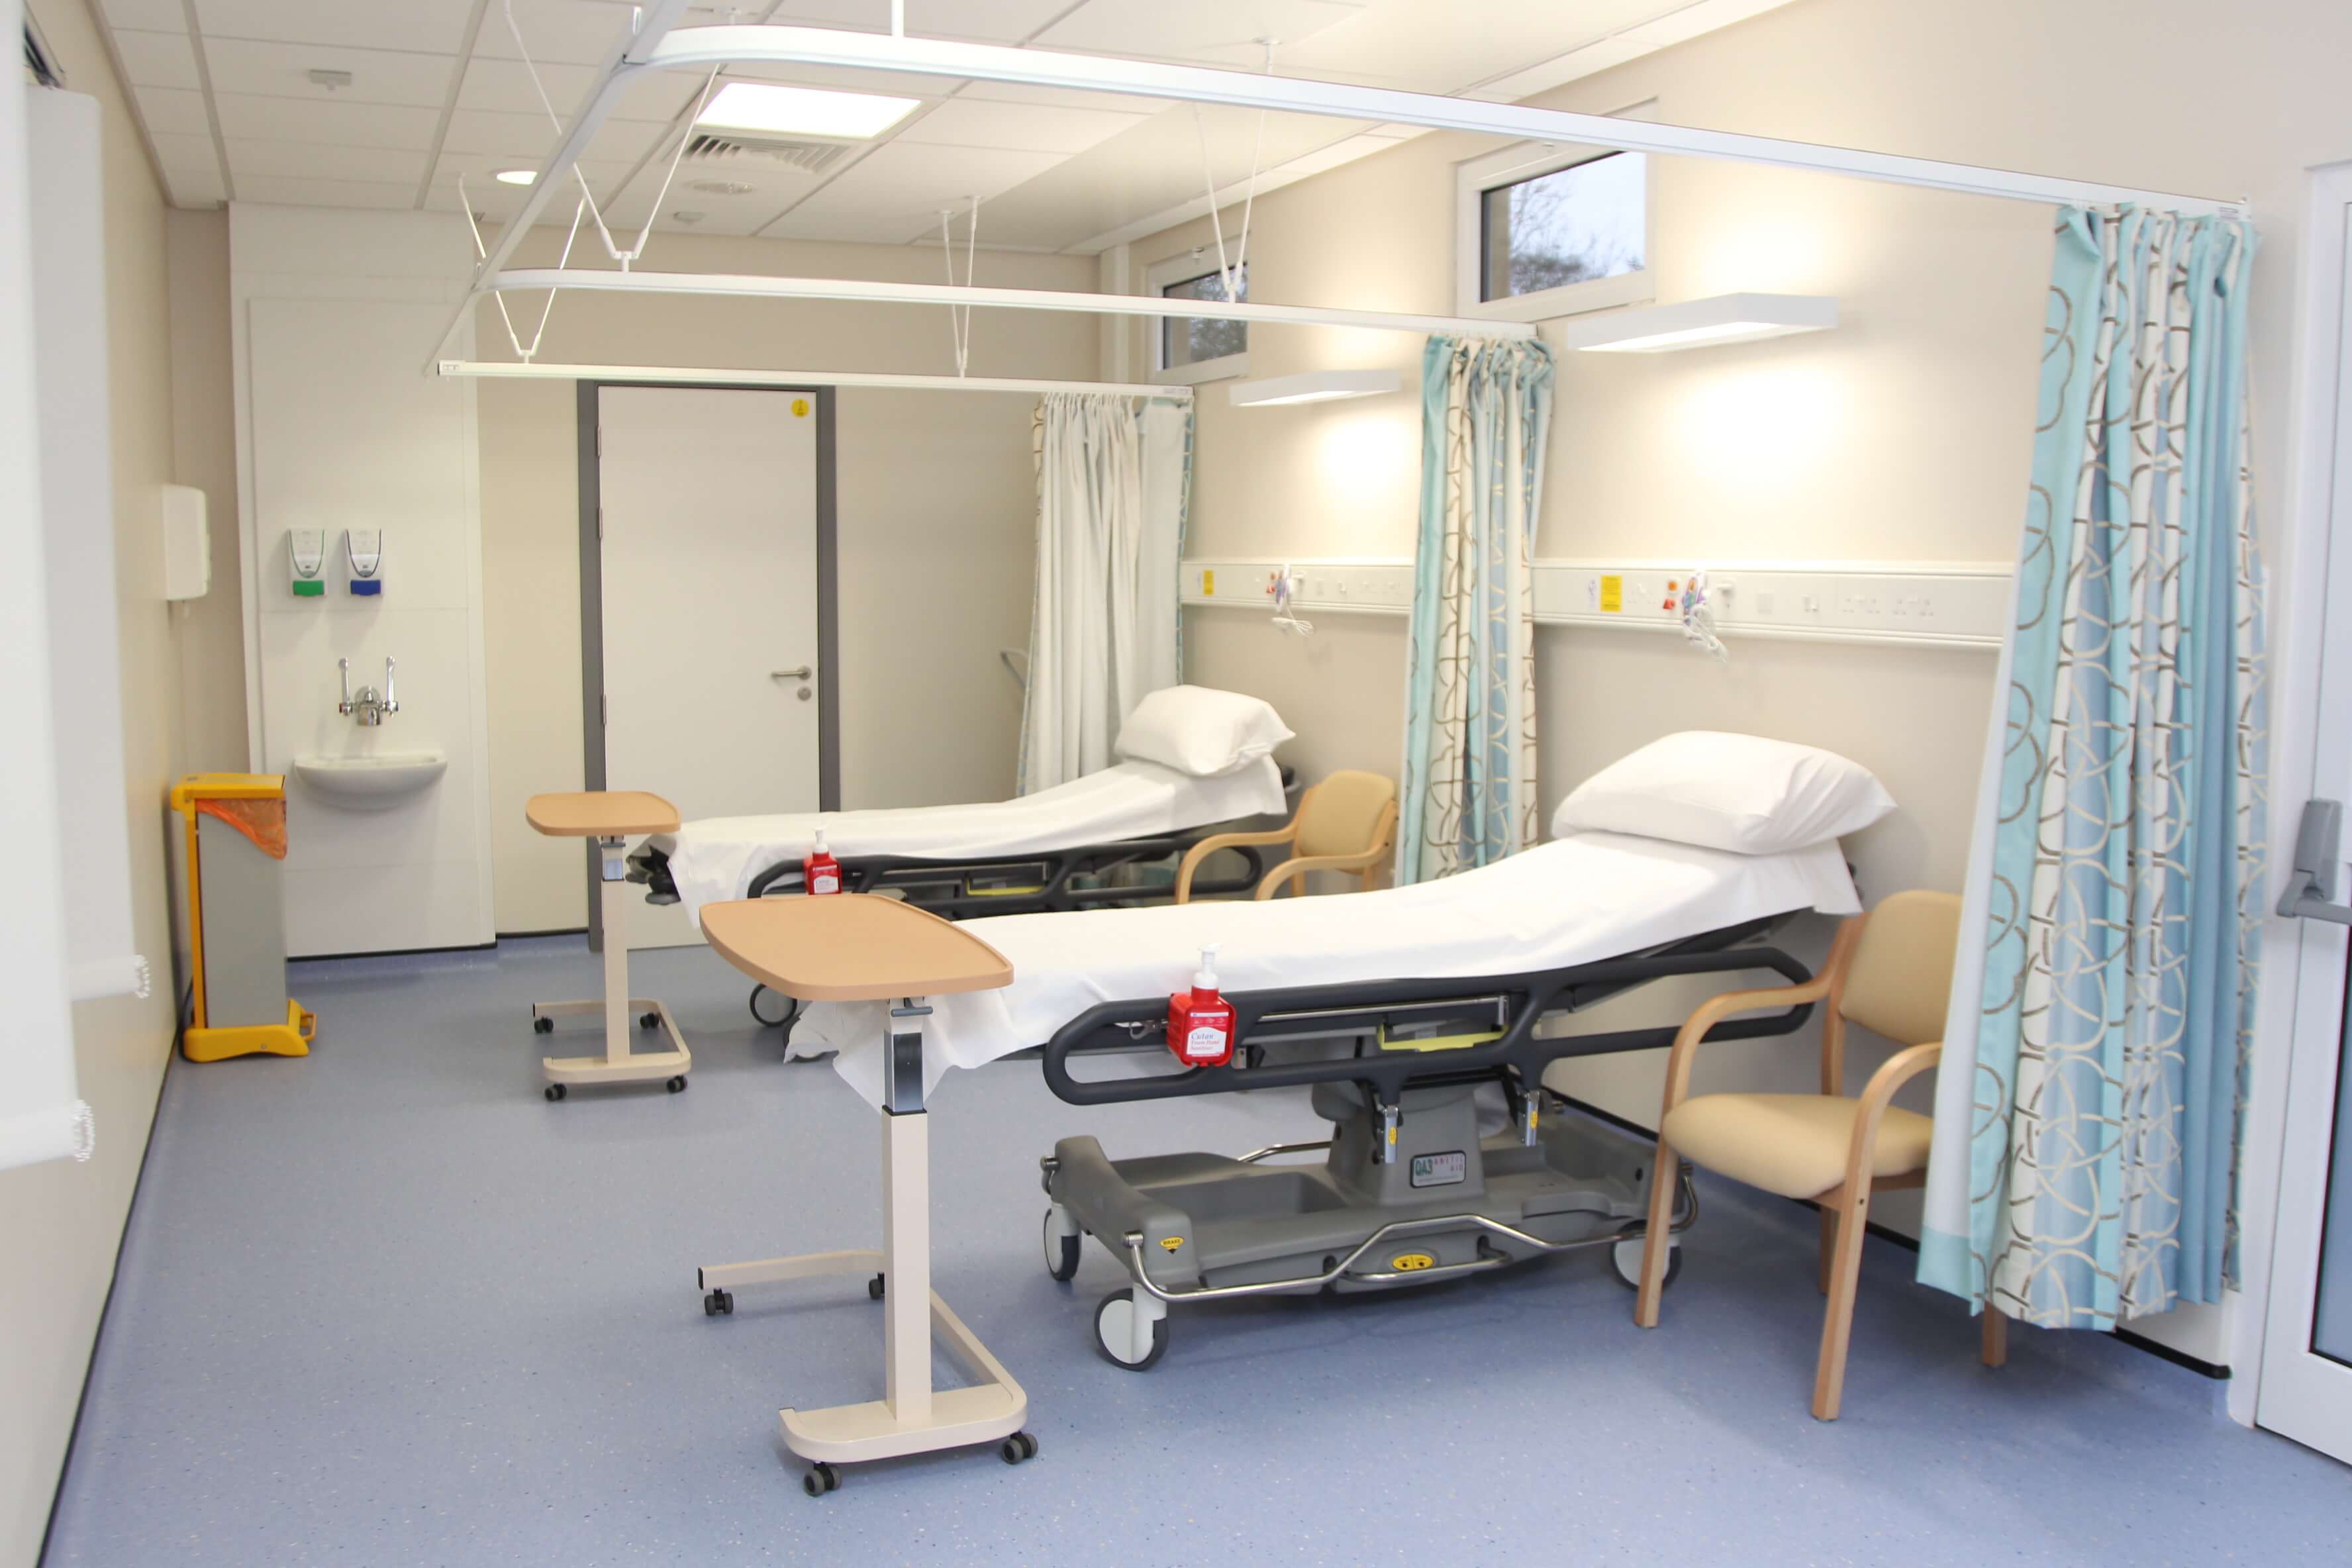 Leicester NHS - St Lukes Hospital flooring